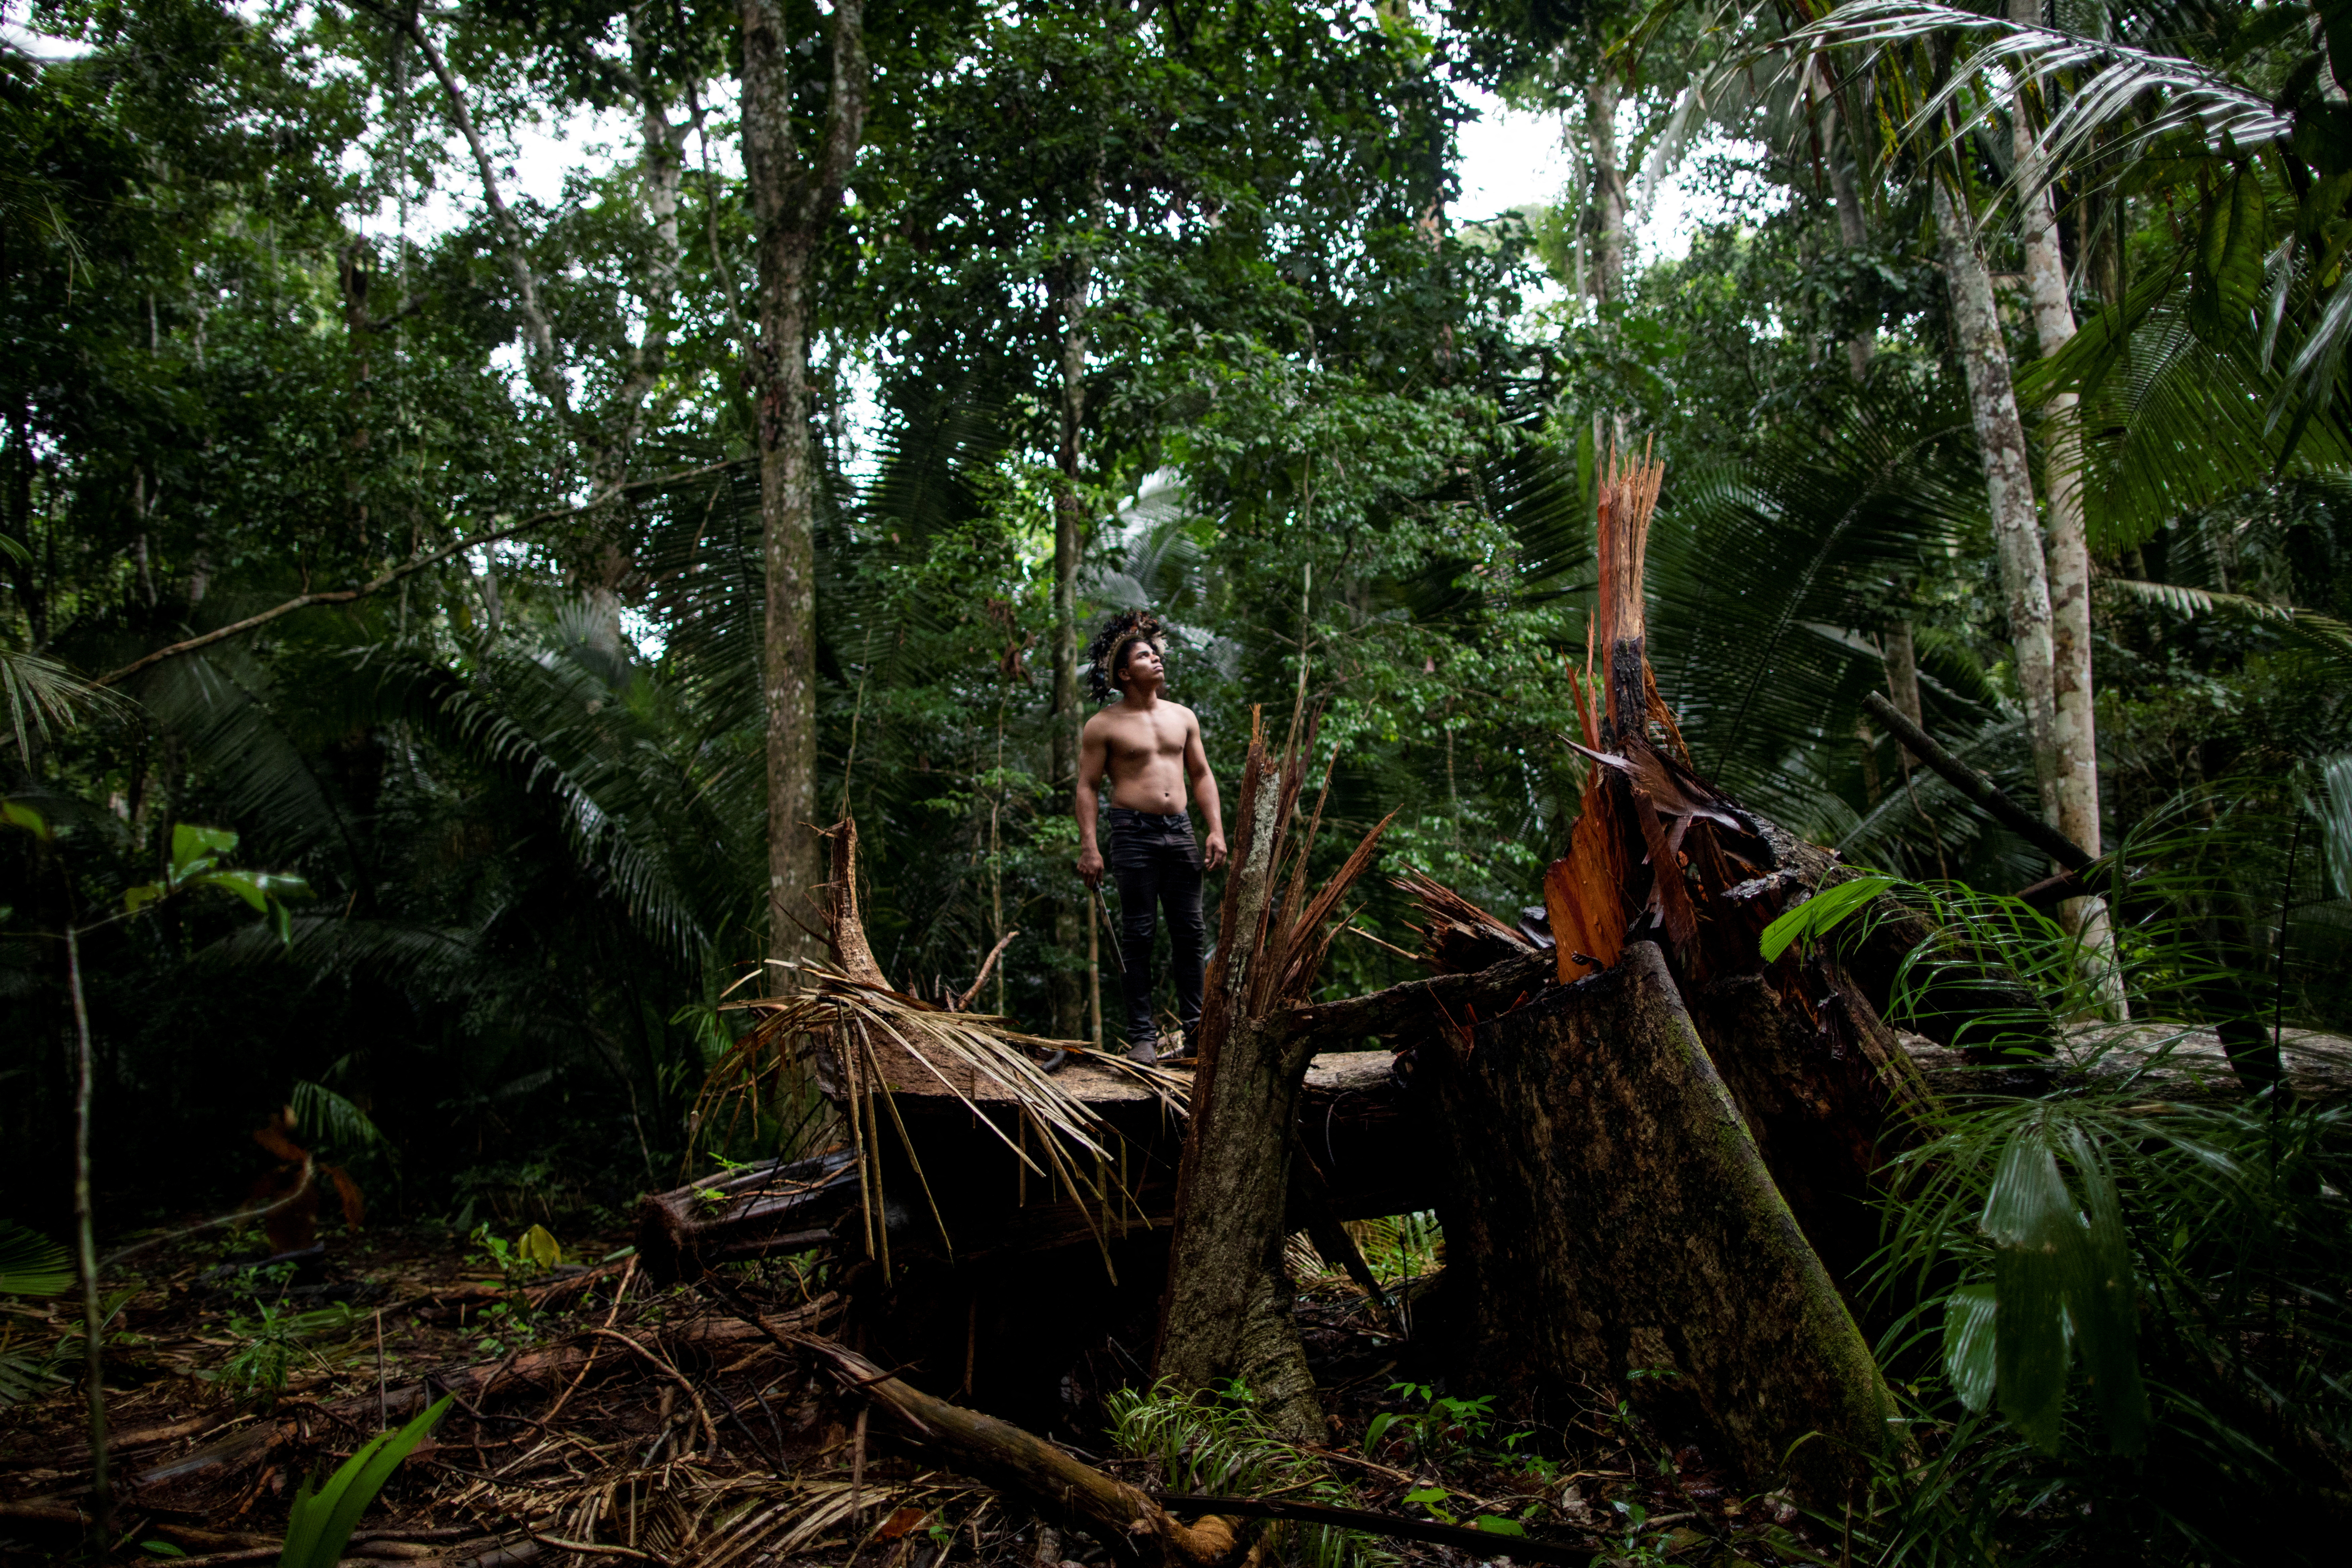 An indigenous man called Tebu, of Uru-eu-wau-wau tribe, looks on in an area deforested by invaders in the village of Alto Jaru, at the Uru-eu-wau-wau Indigenous Reservation near Campo Novo de Rondonia